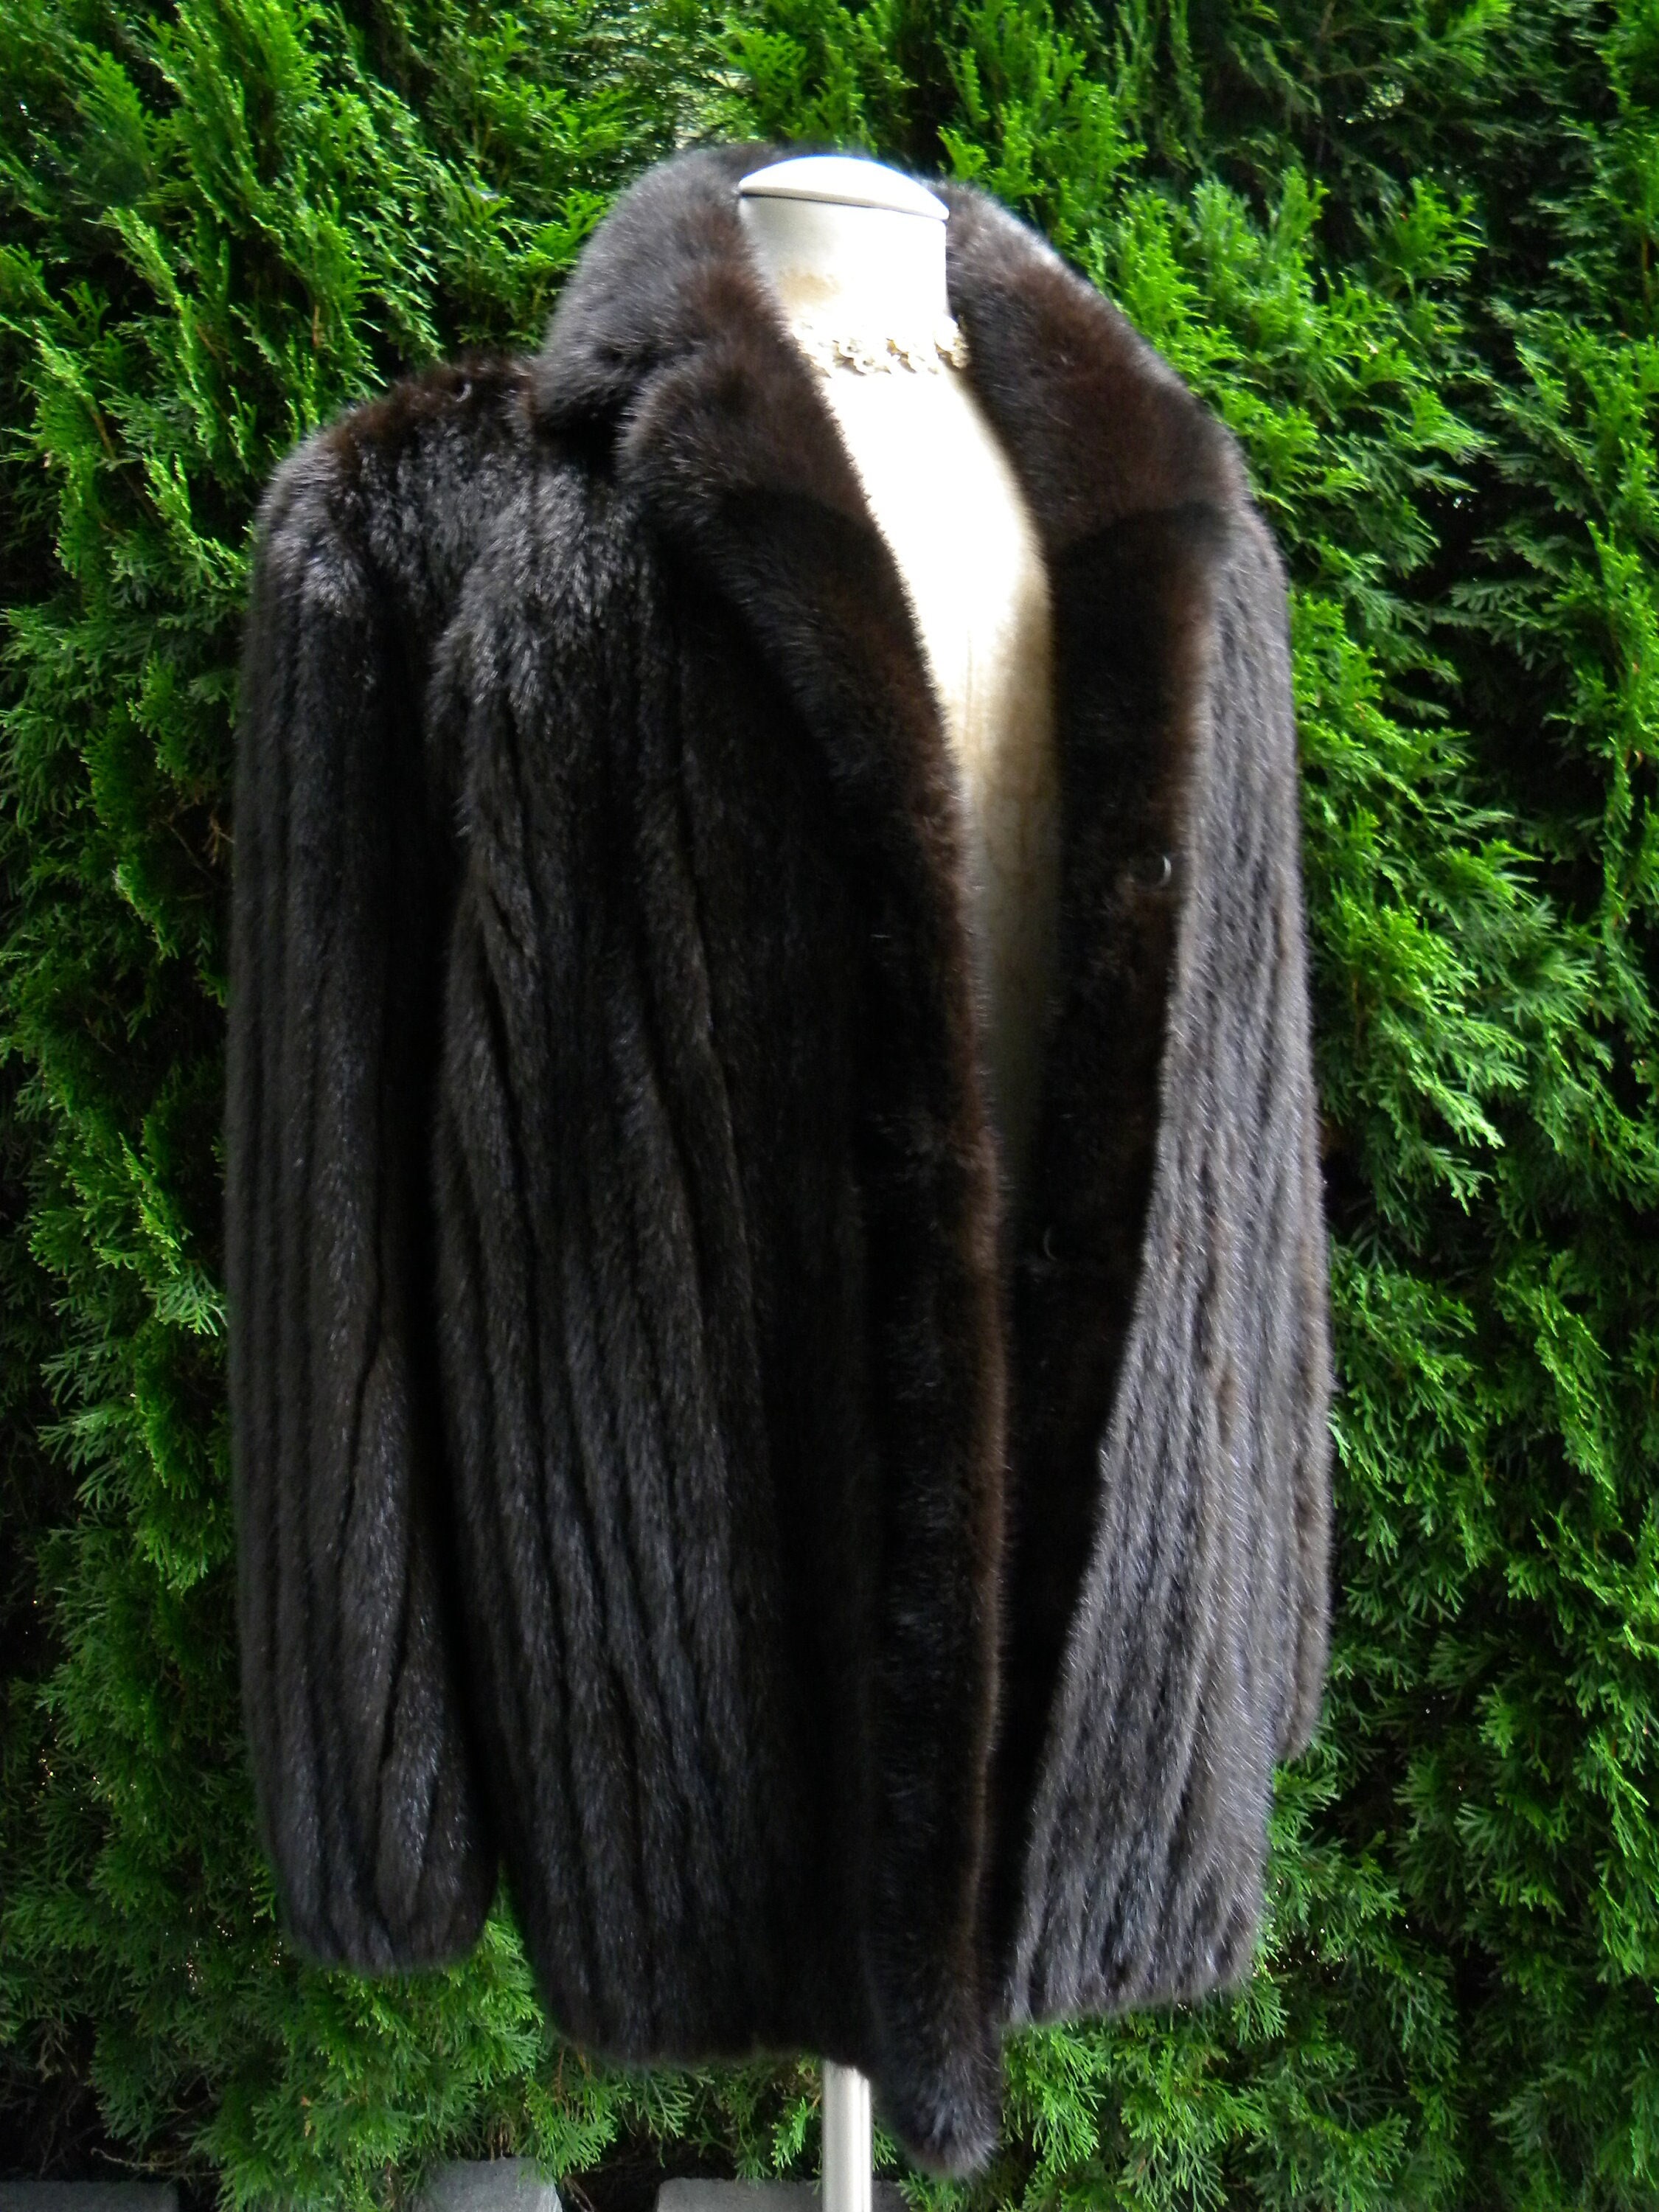 Full length brown real mink fur coat with hood. Long line natural color  warm winter fur coat. Full skin hooded mink fur overcoat - PAPEL FURS